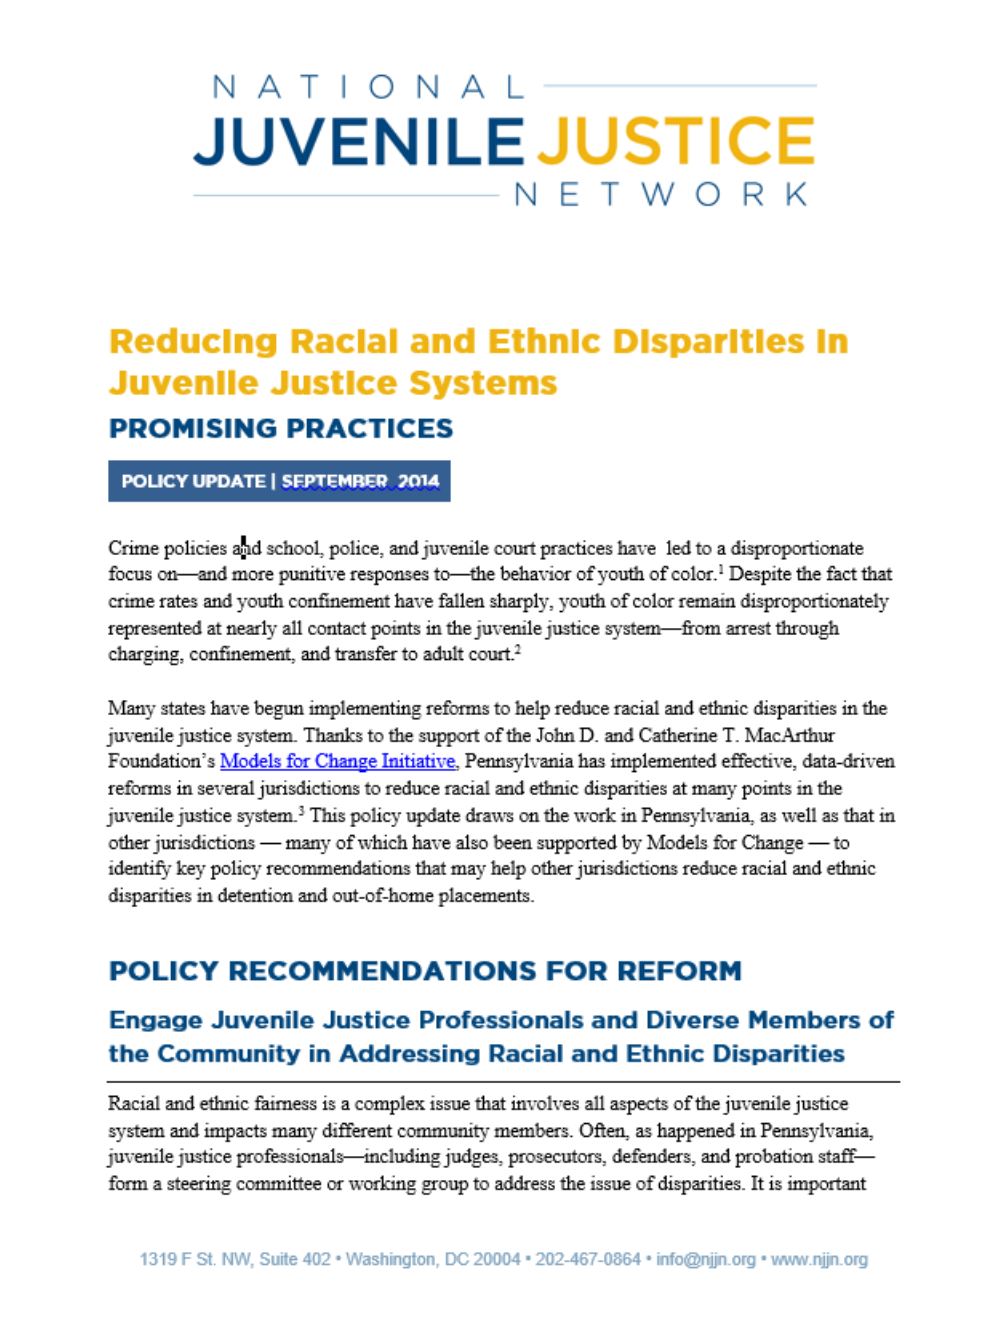 juvenile-justice-reform_racial-ethnic-disparities-doc-image